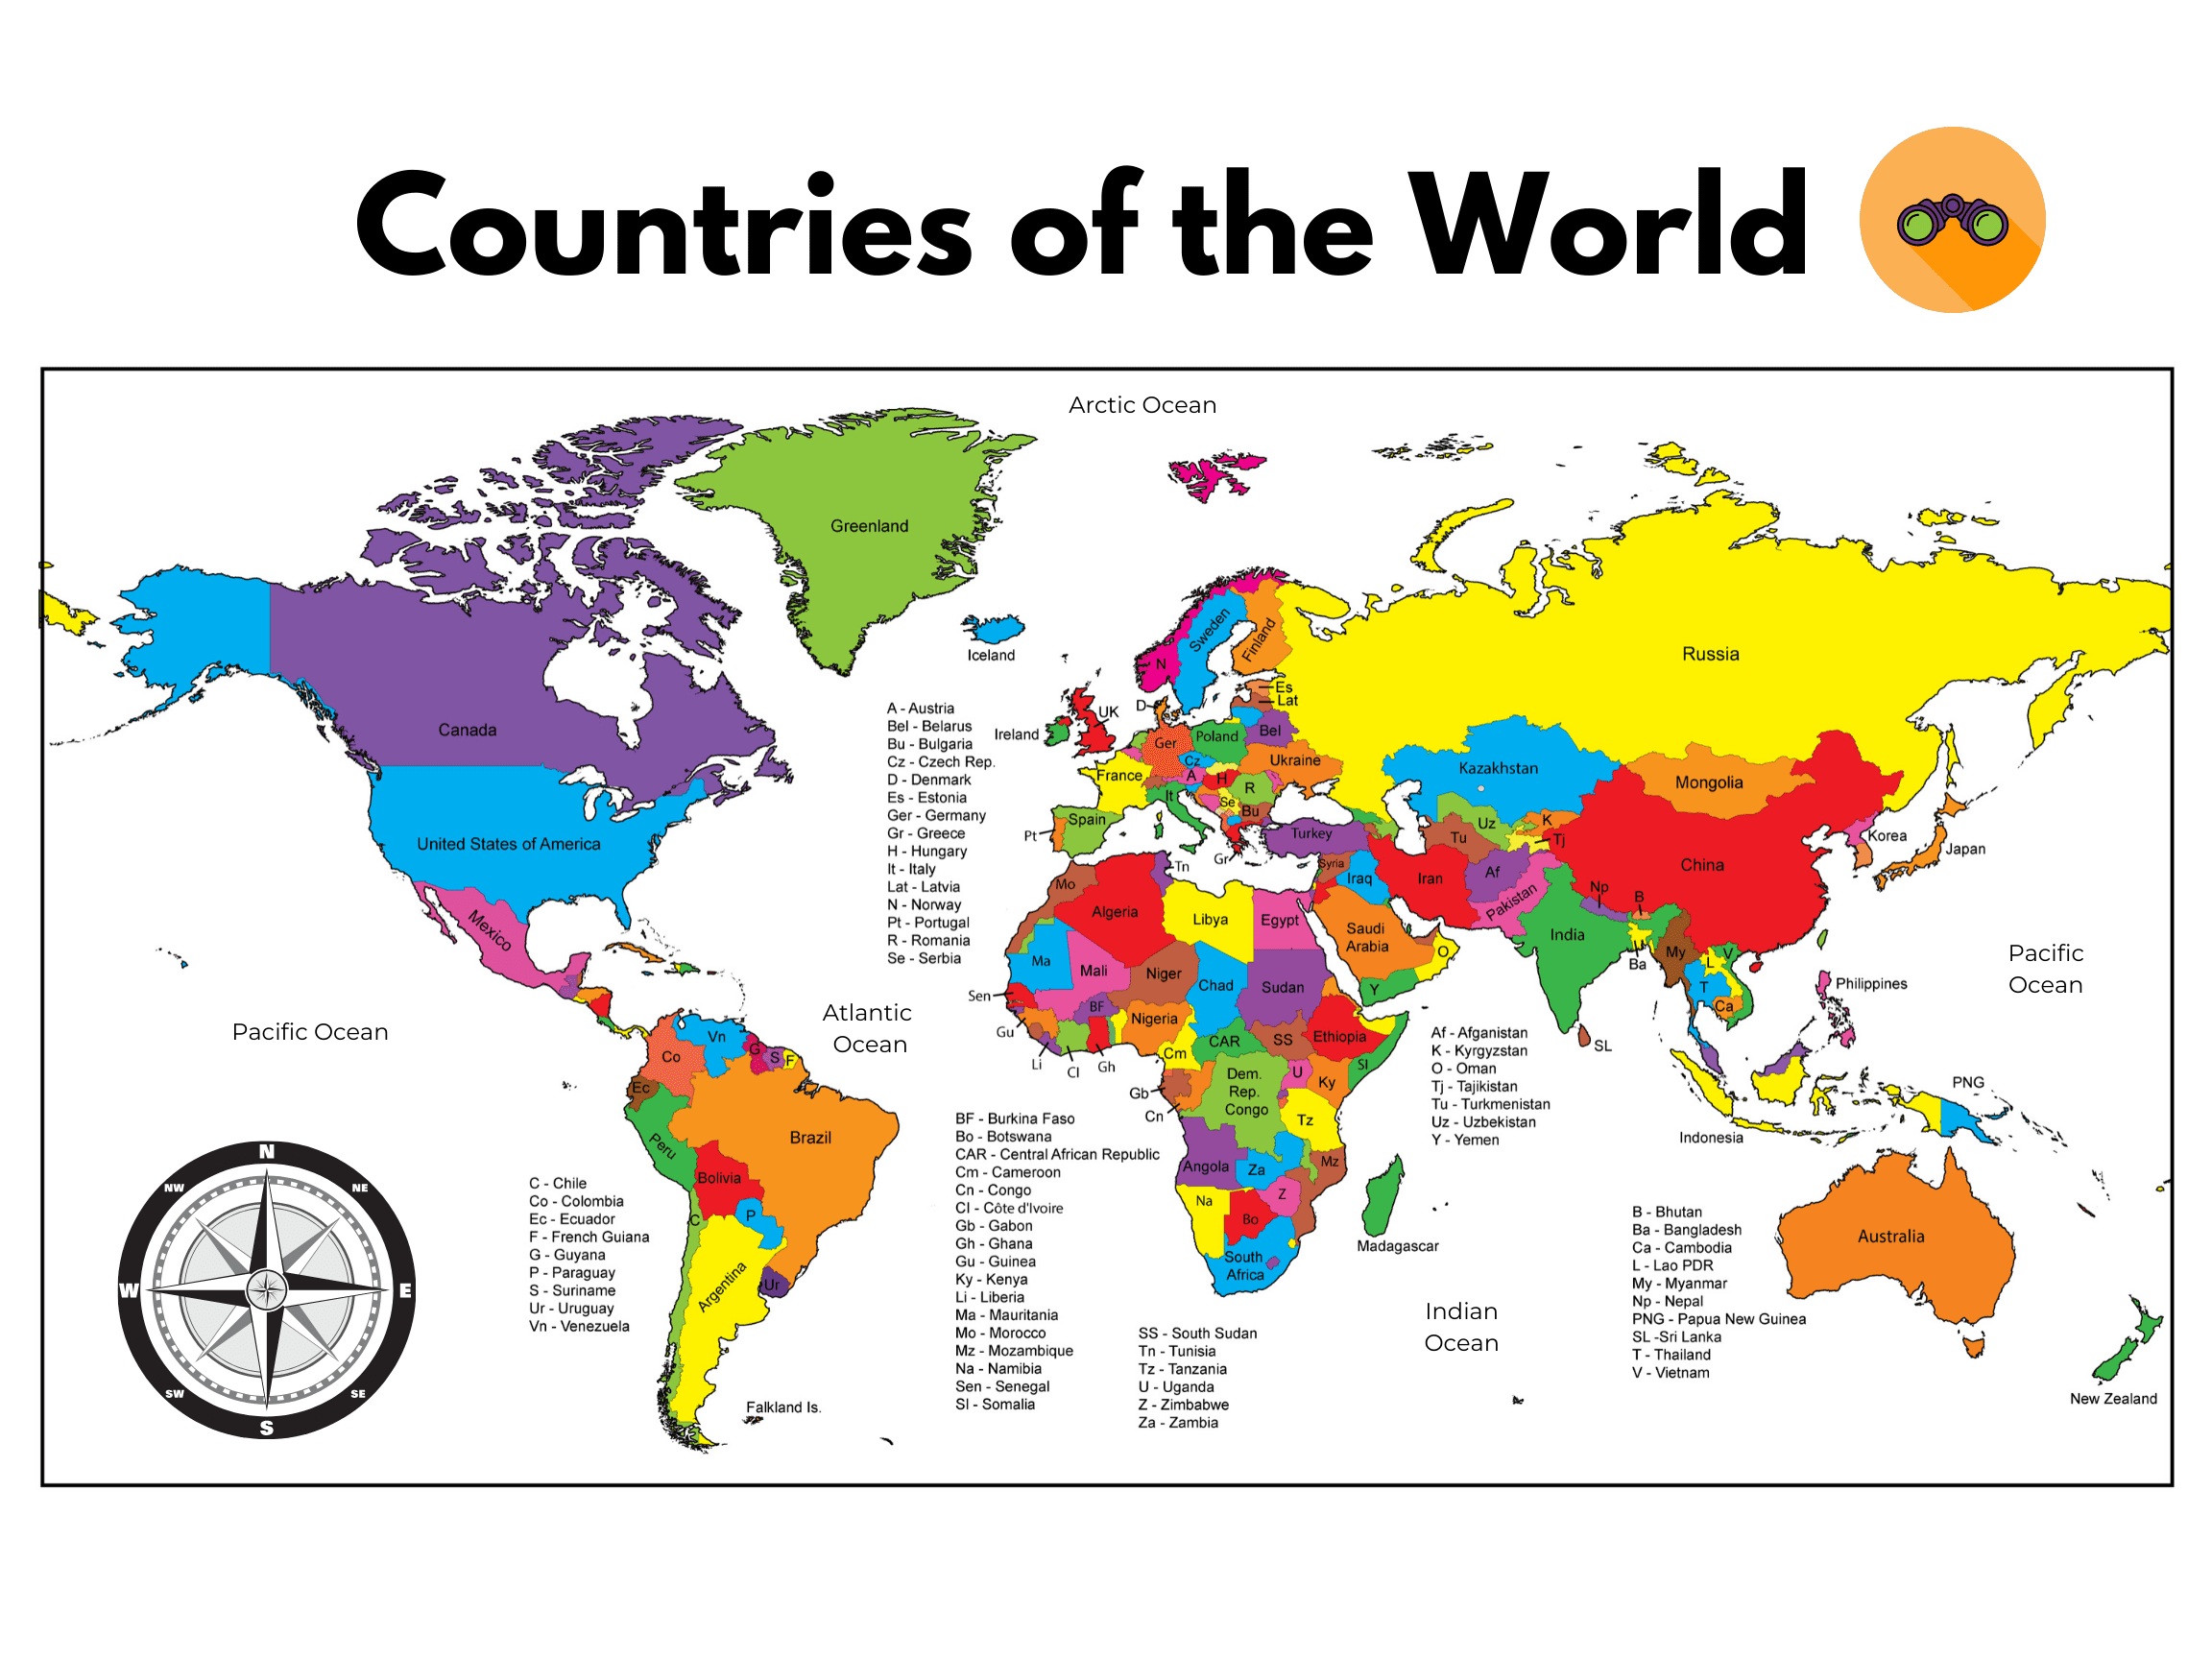 World Atlas Of